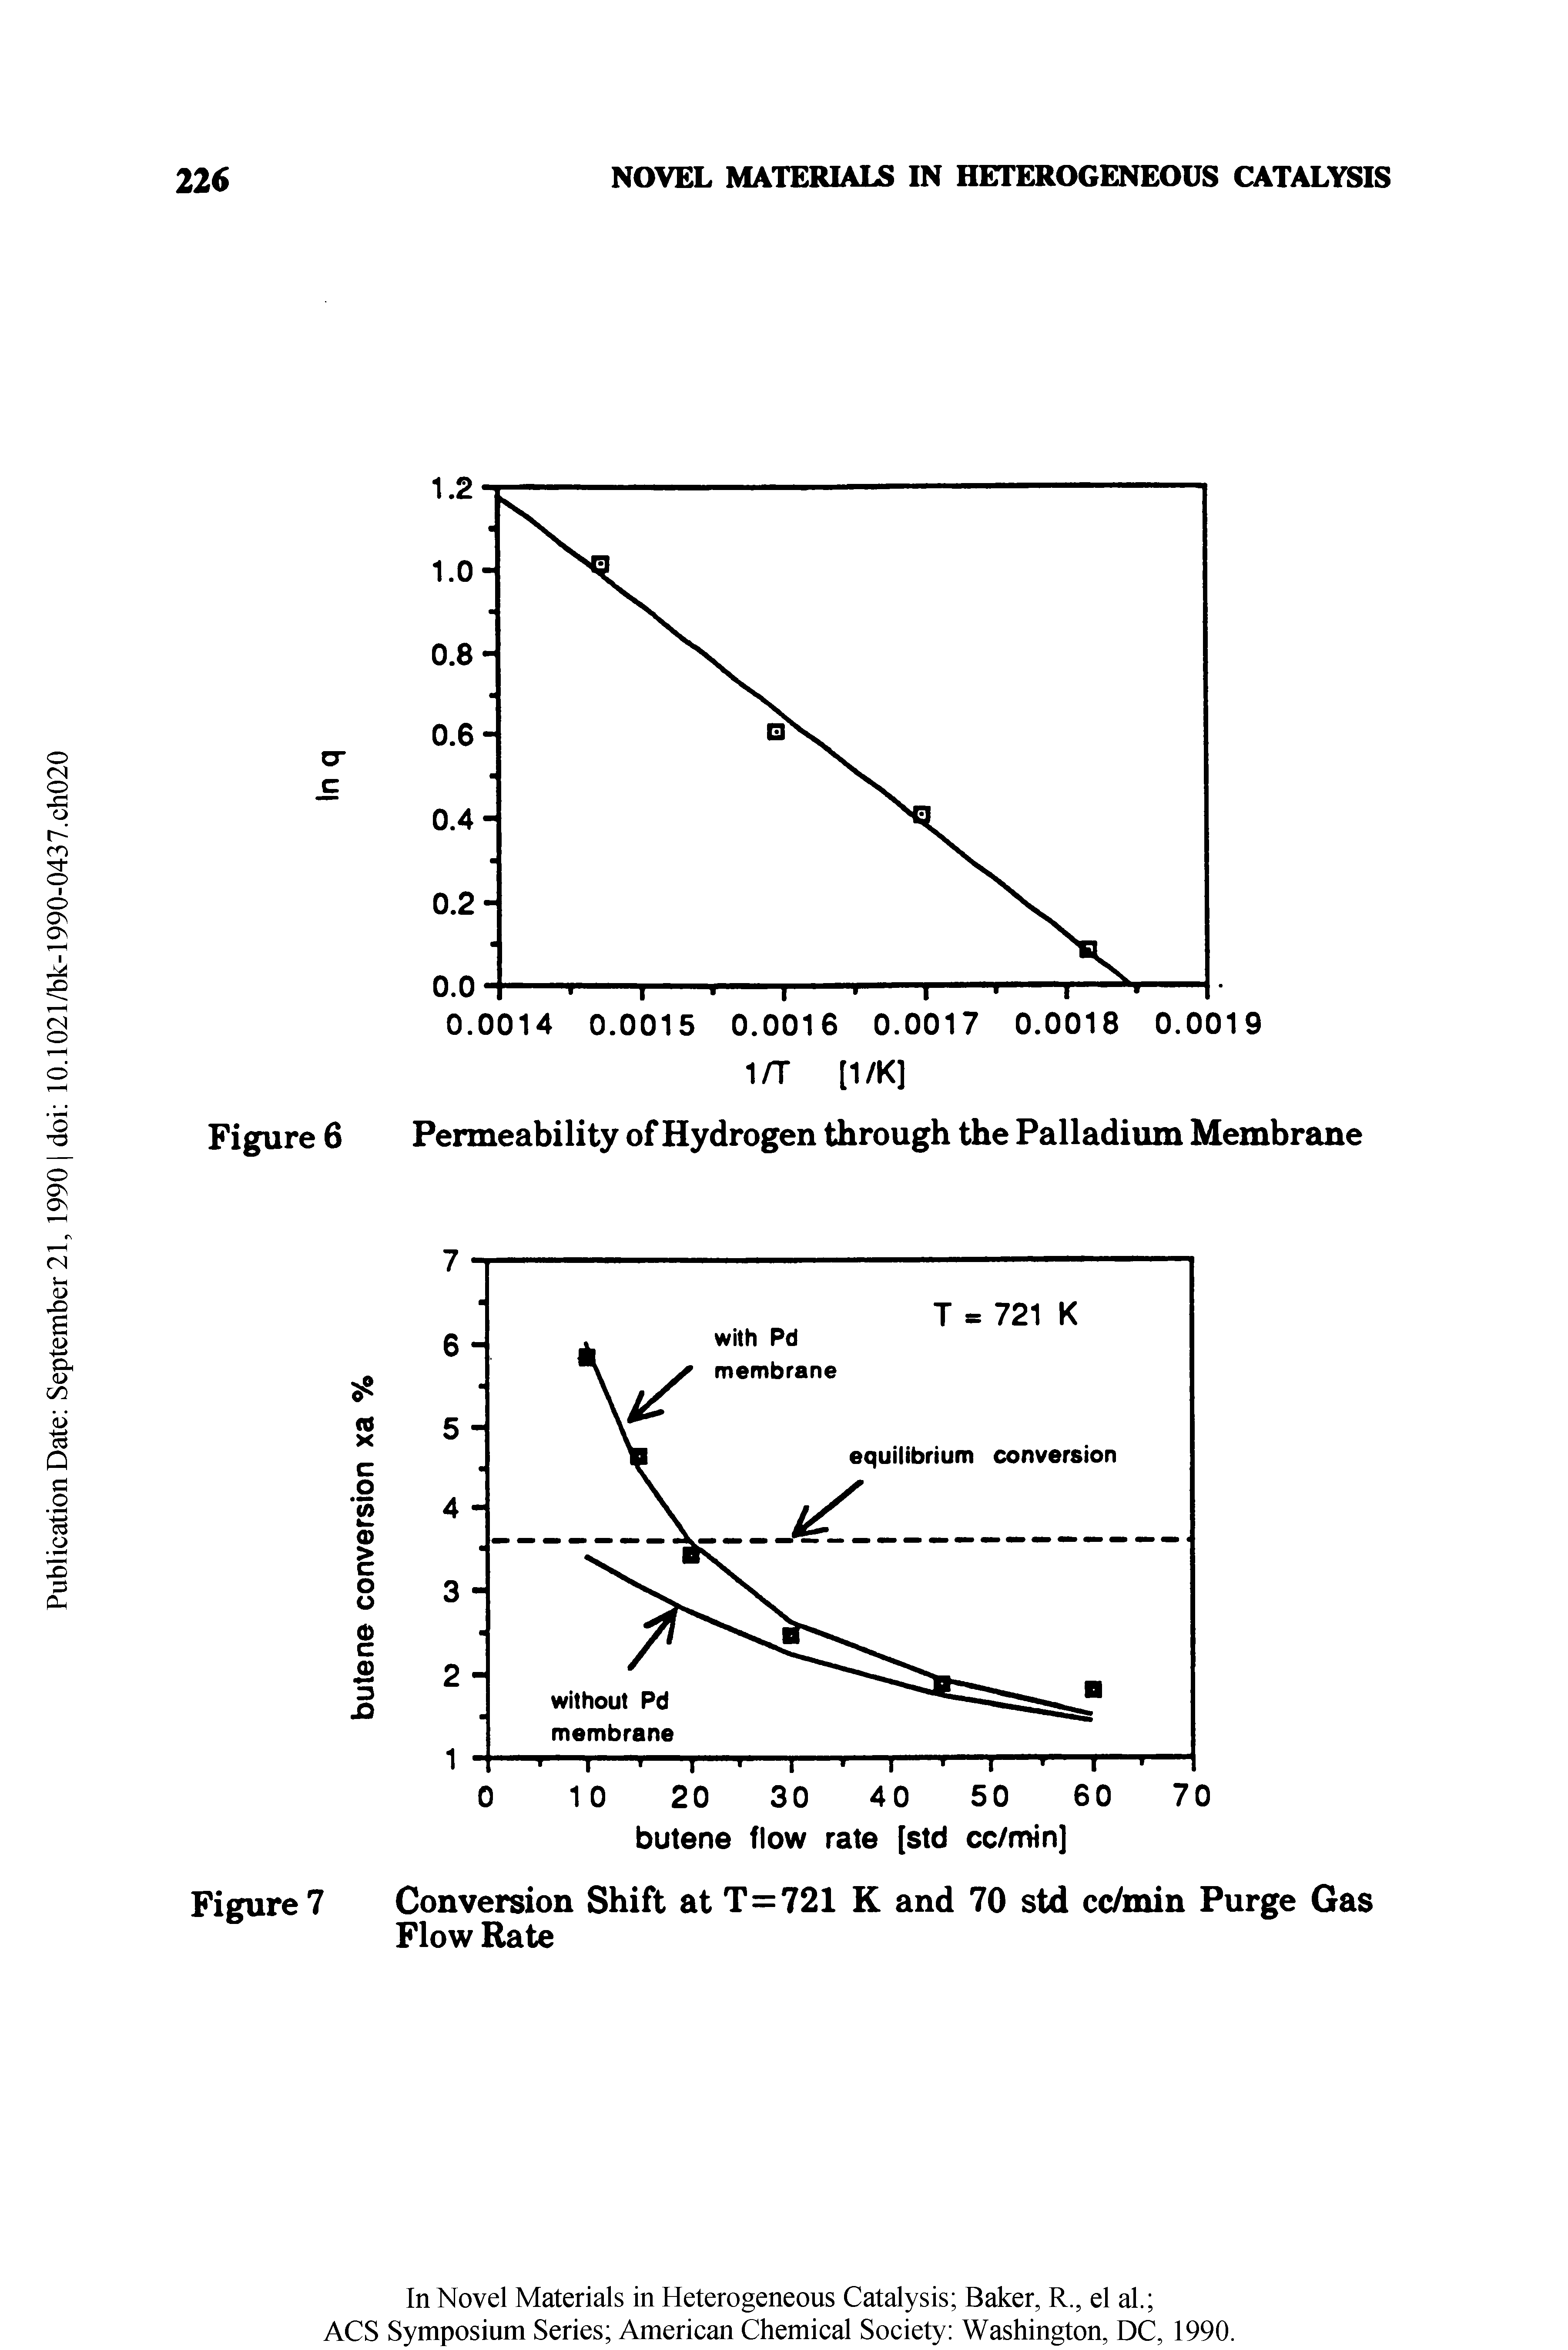 Figure Conversion Shift at T=721 K and 70 std cc/nain Purge Gas Flow Rate...